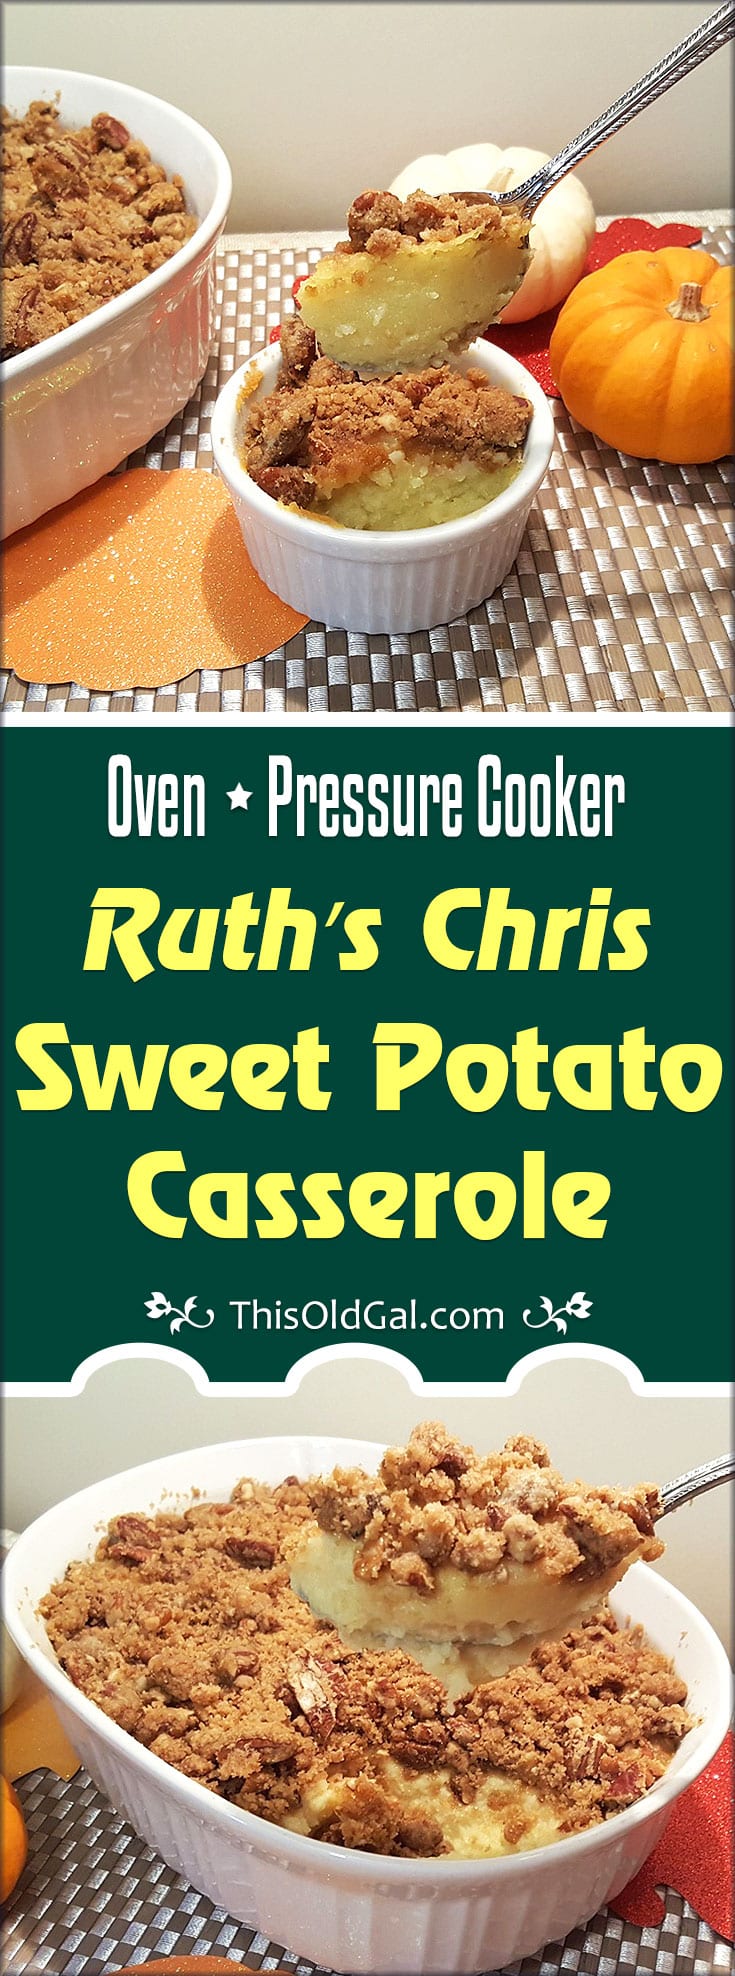 Ruth’s Chris Sweet Potato Casserole (Pressure Cooker & Oven Method)